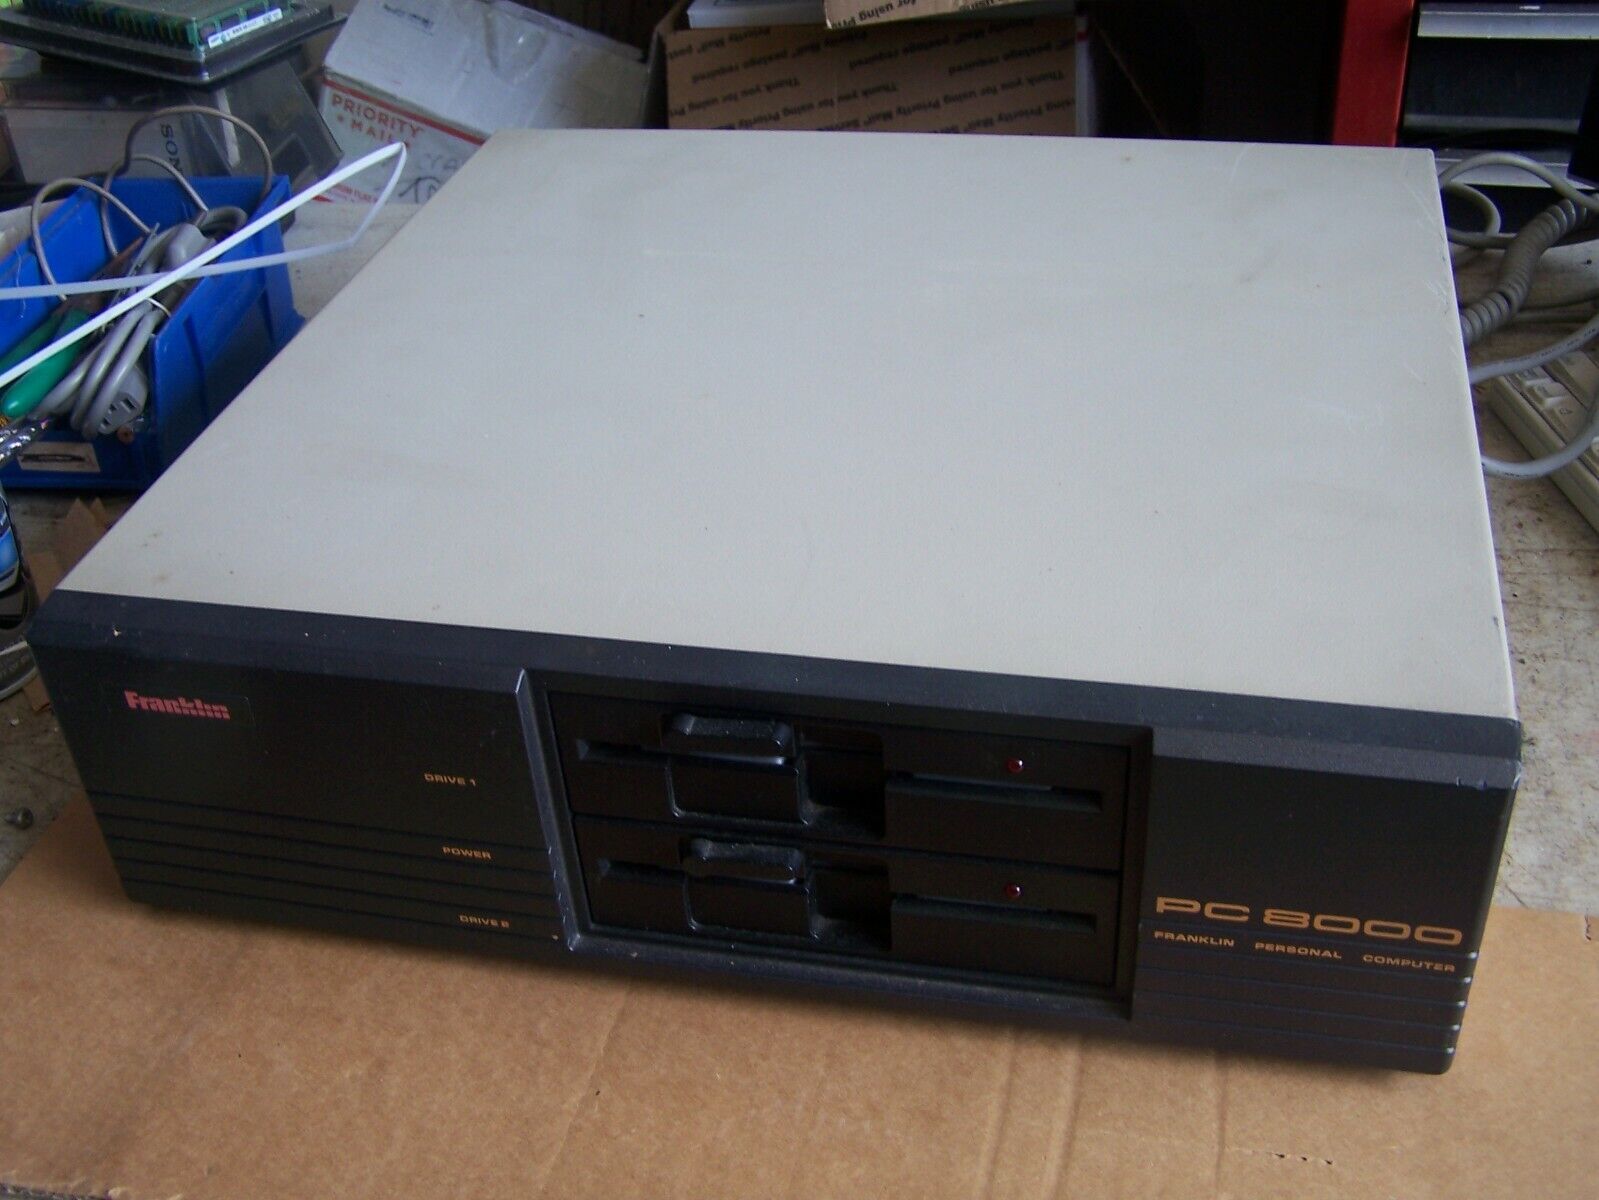 Vintage Rare Franklin PC 8000 Computer - Estate Sale SOLD AS IS